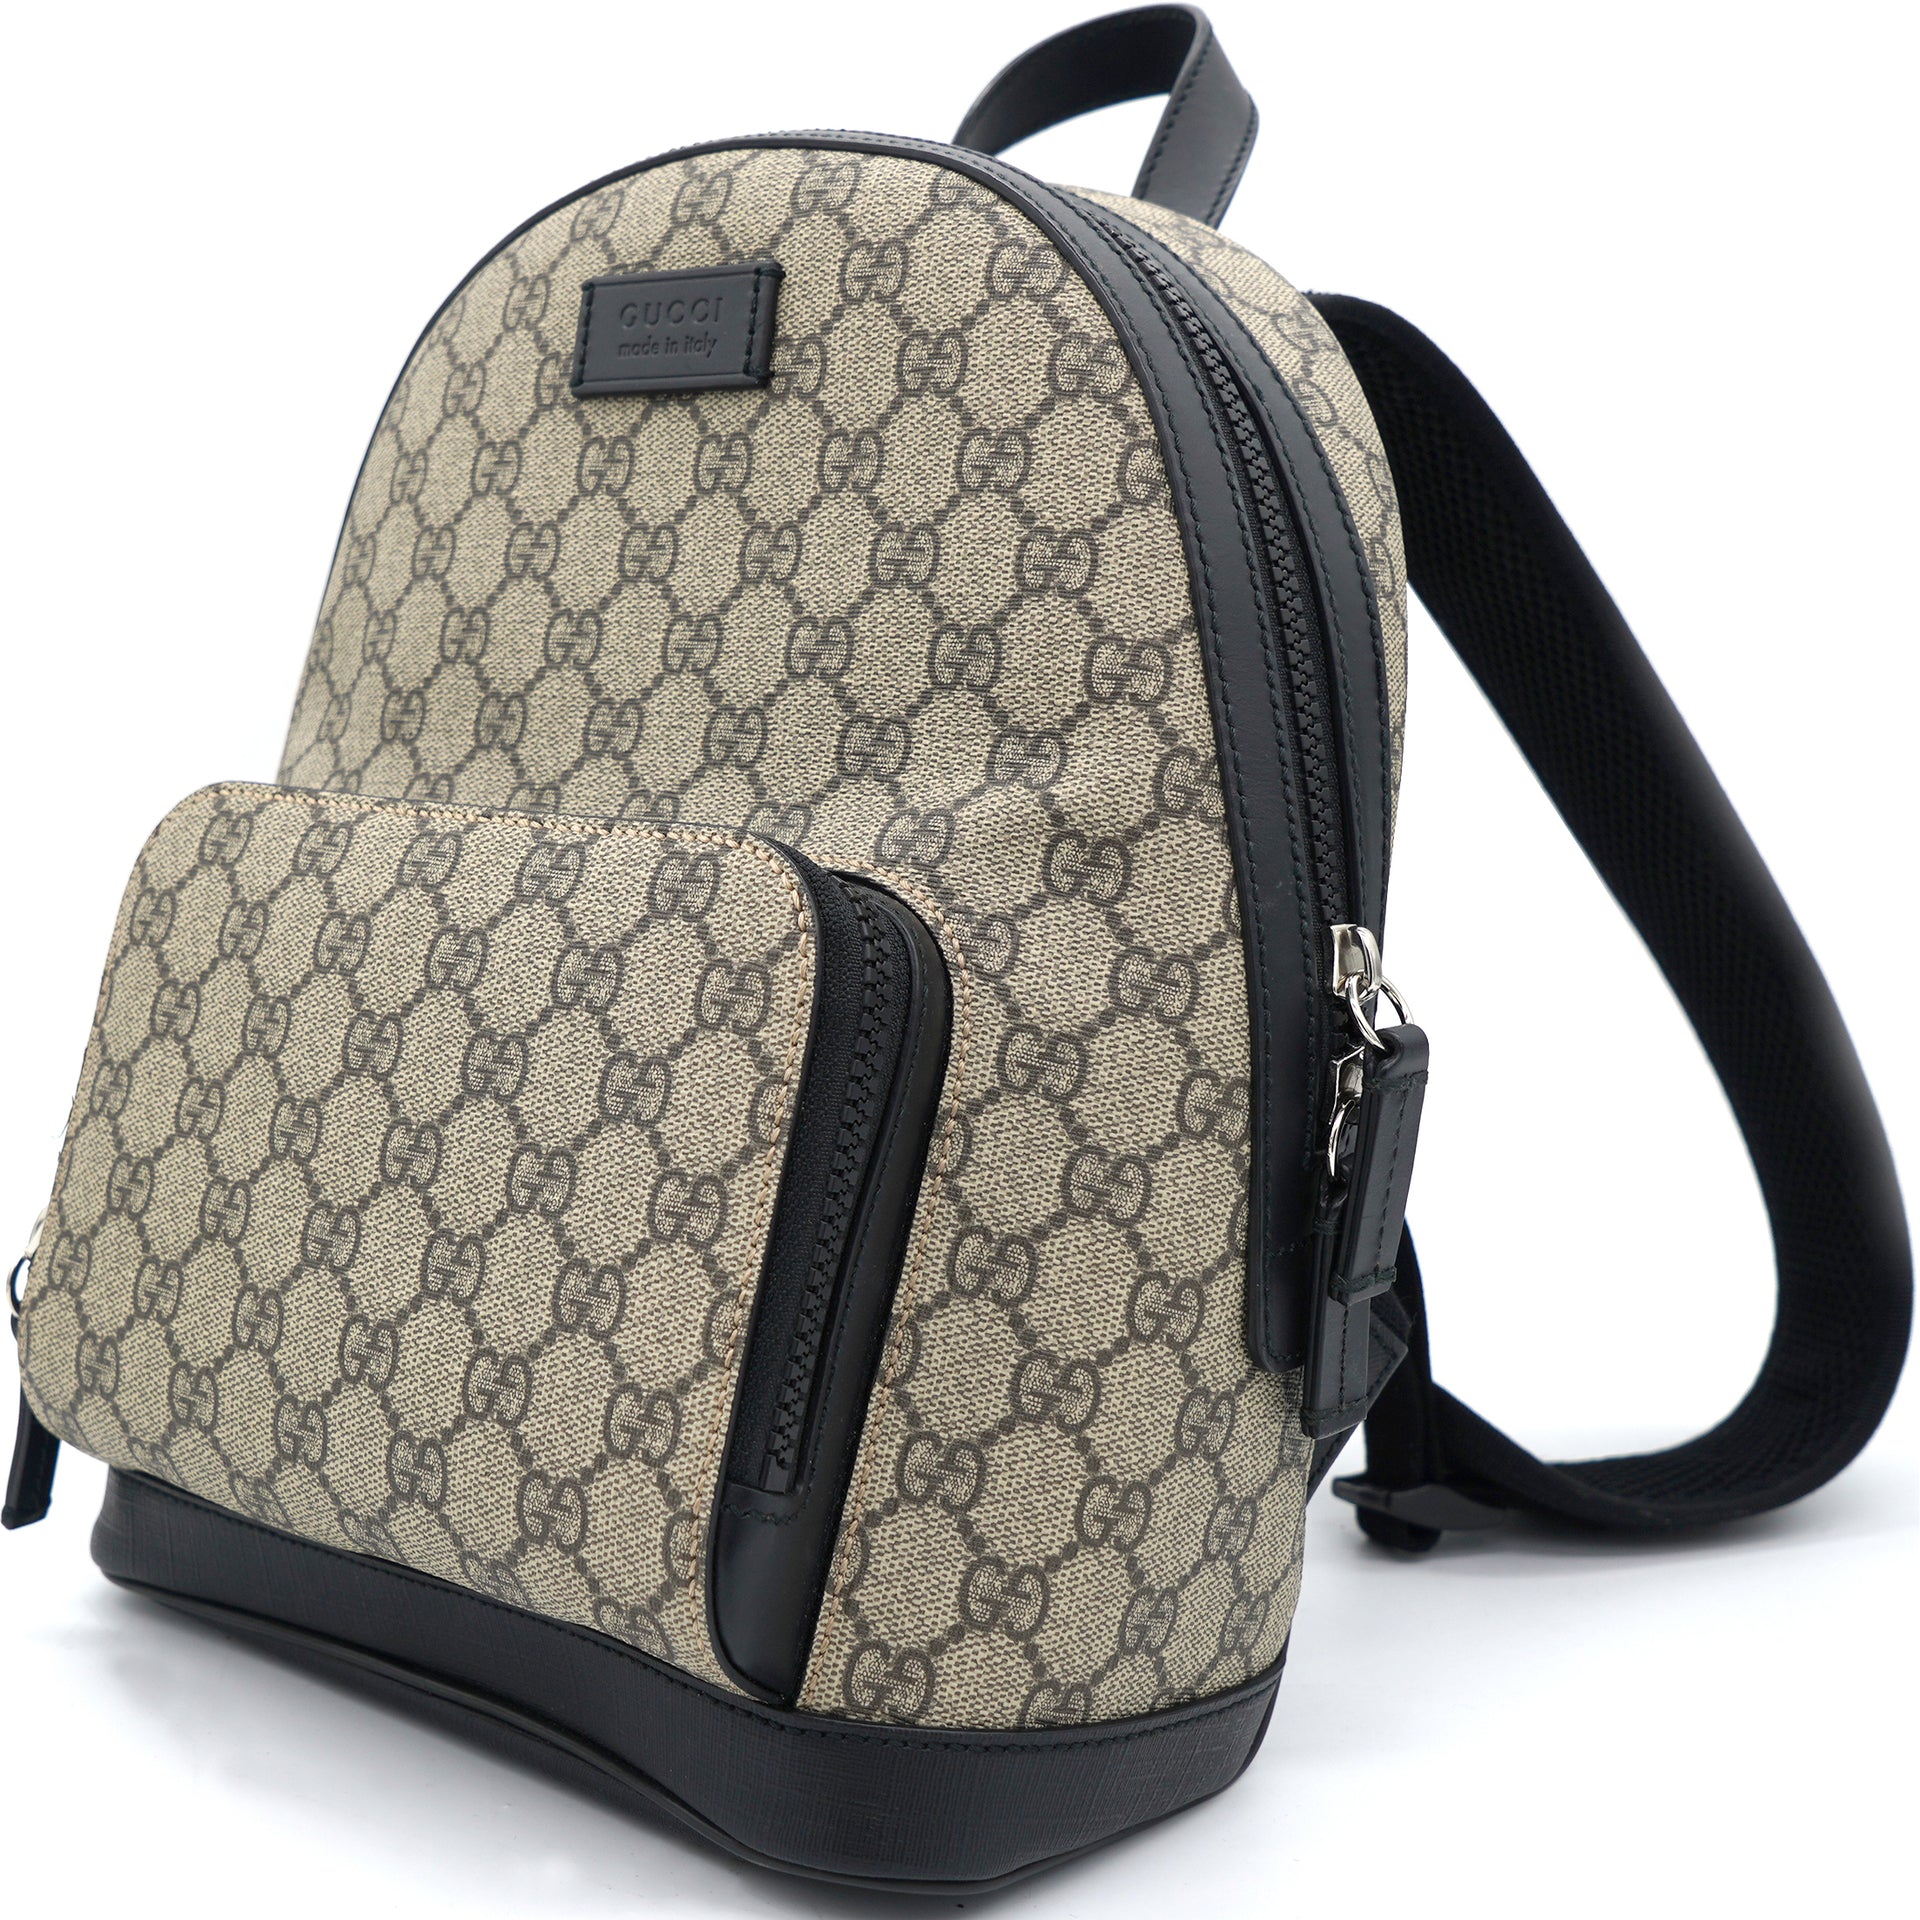 Gucci backpack black | dubizzle